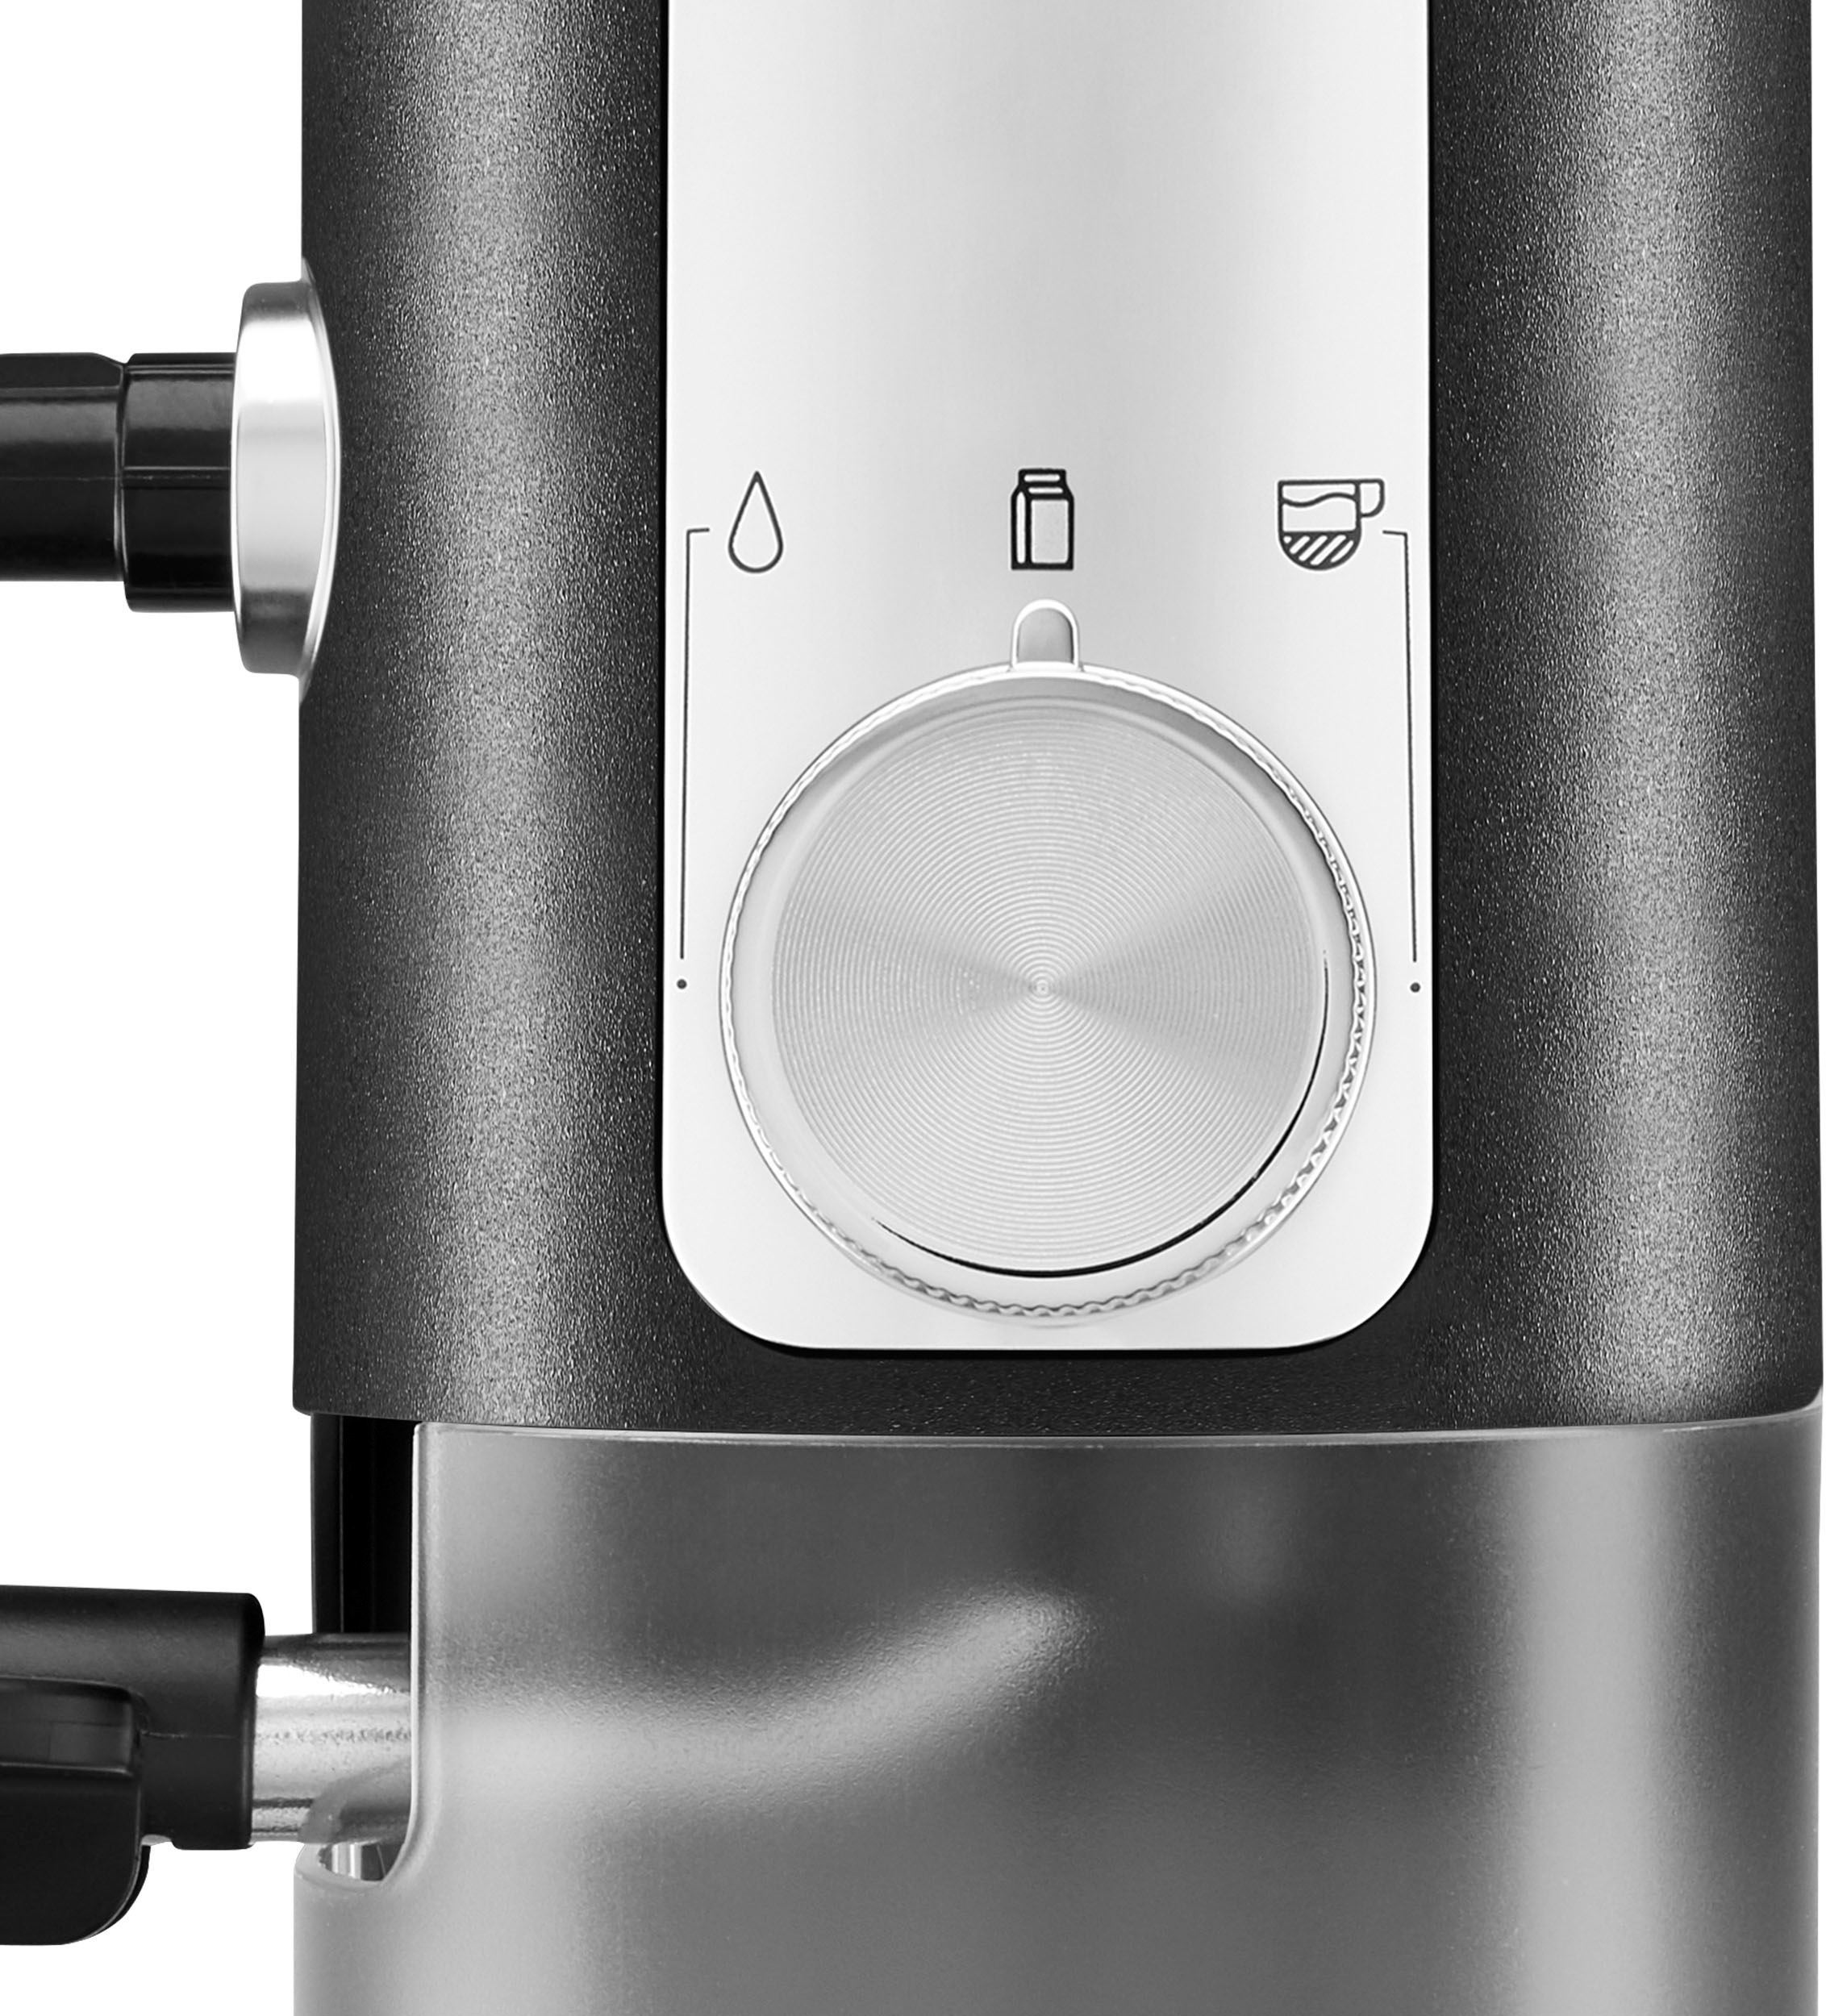 KitchenAid - KES6404DG - Semi-Automatic Espresso Machine and Automatic Milk  Frother Attachment-KES6404DG